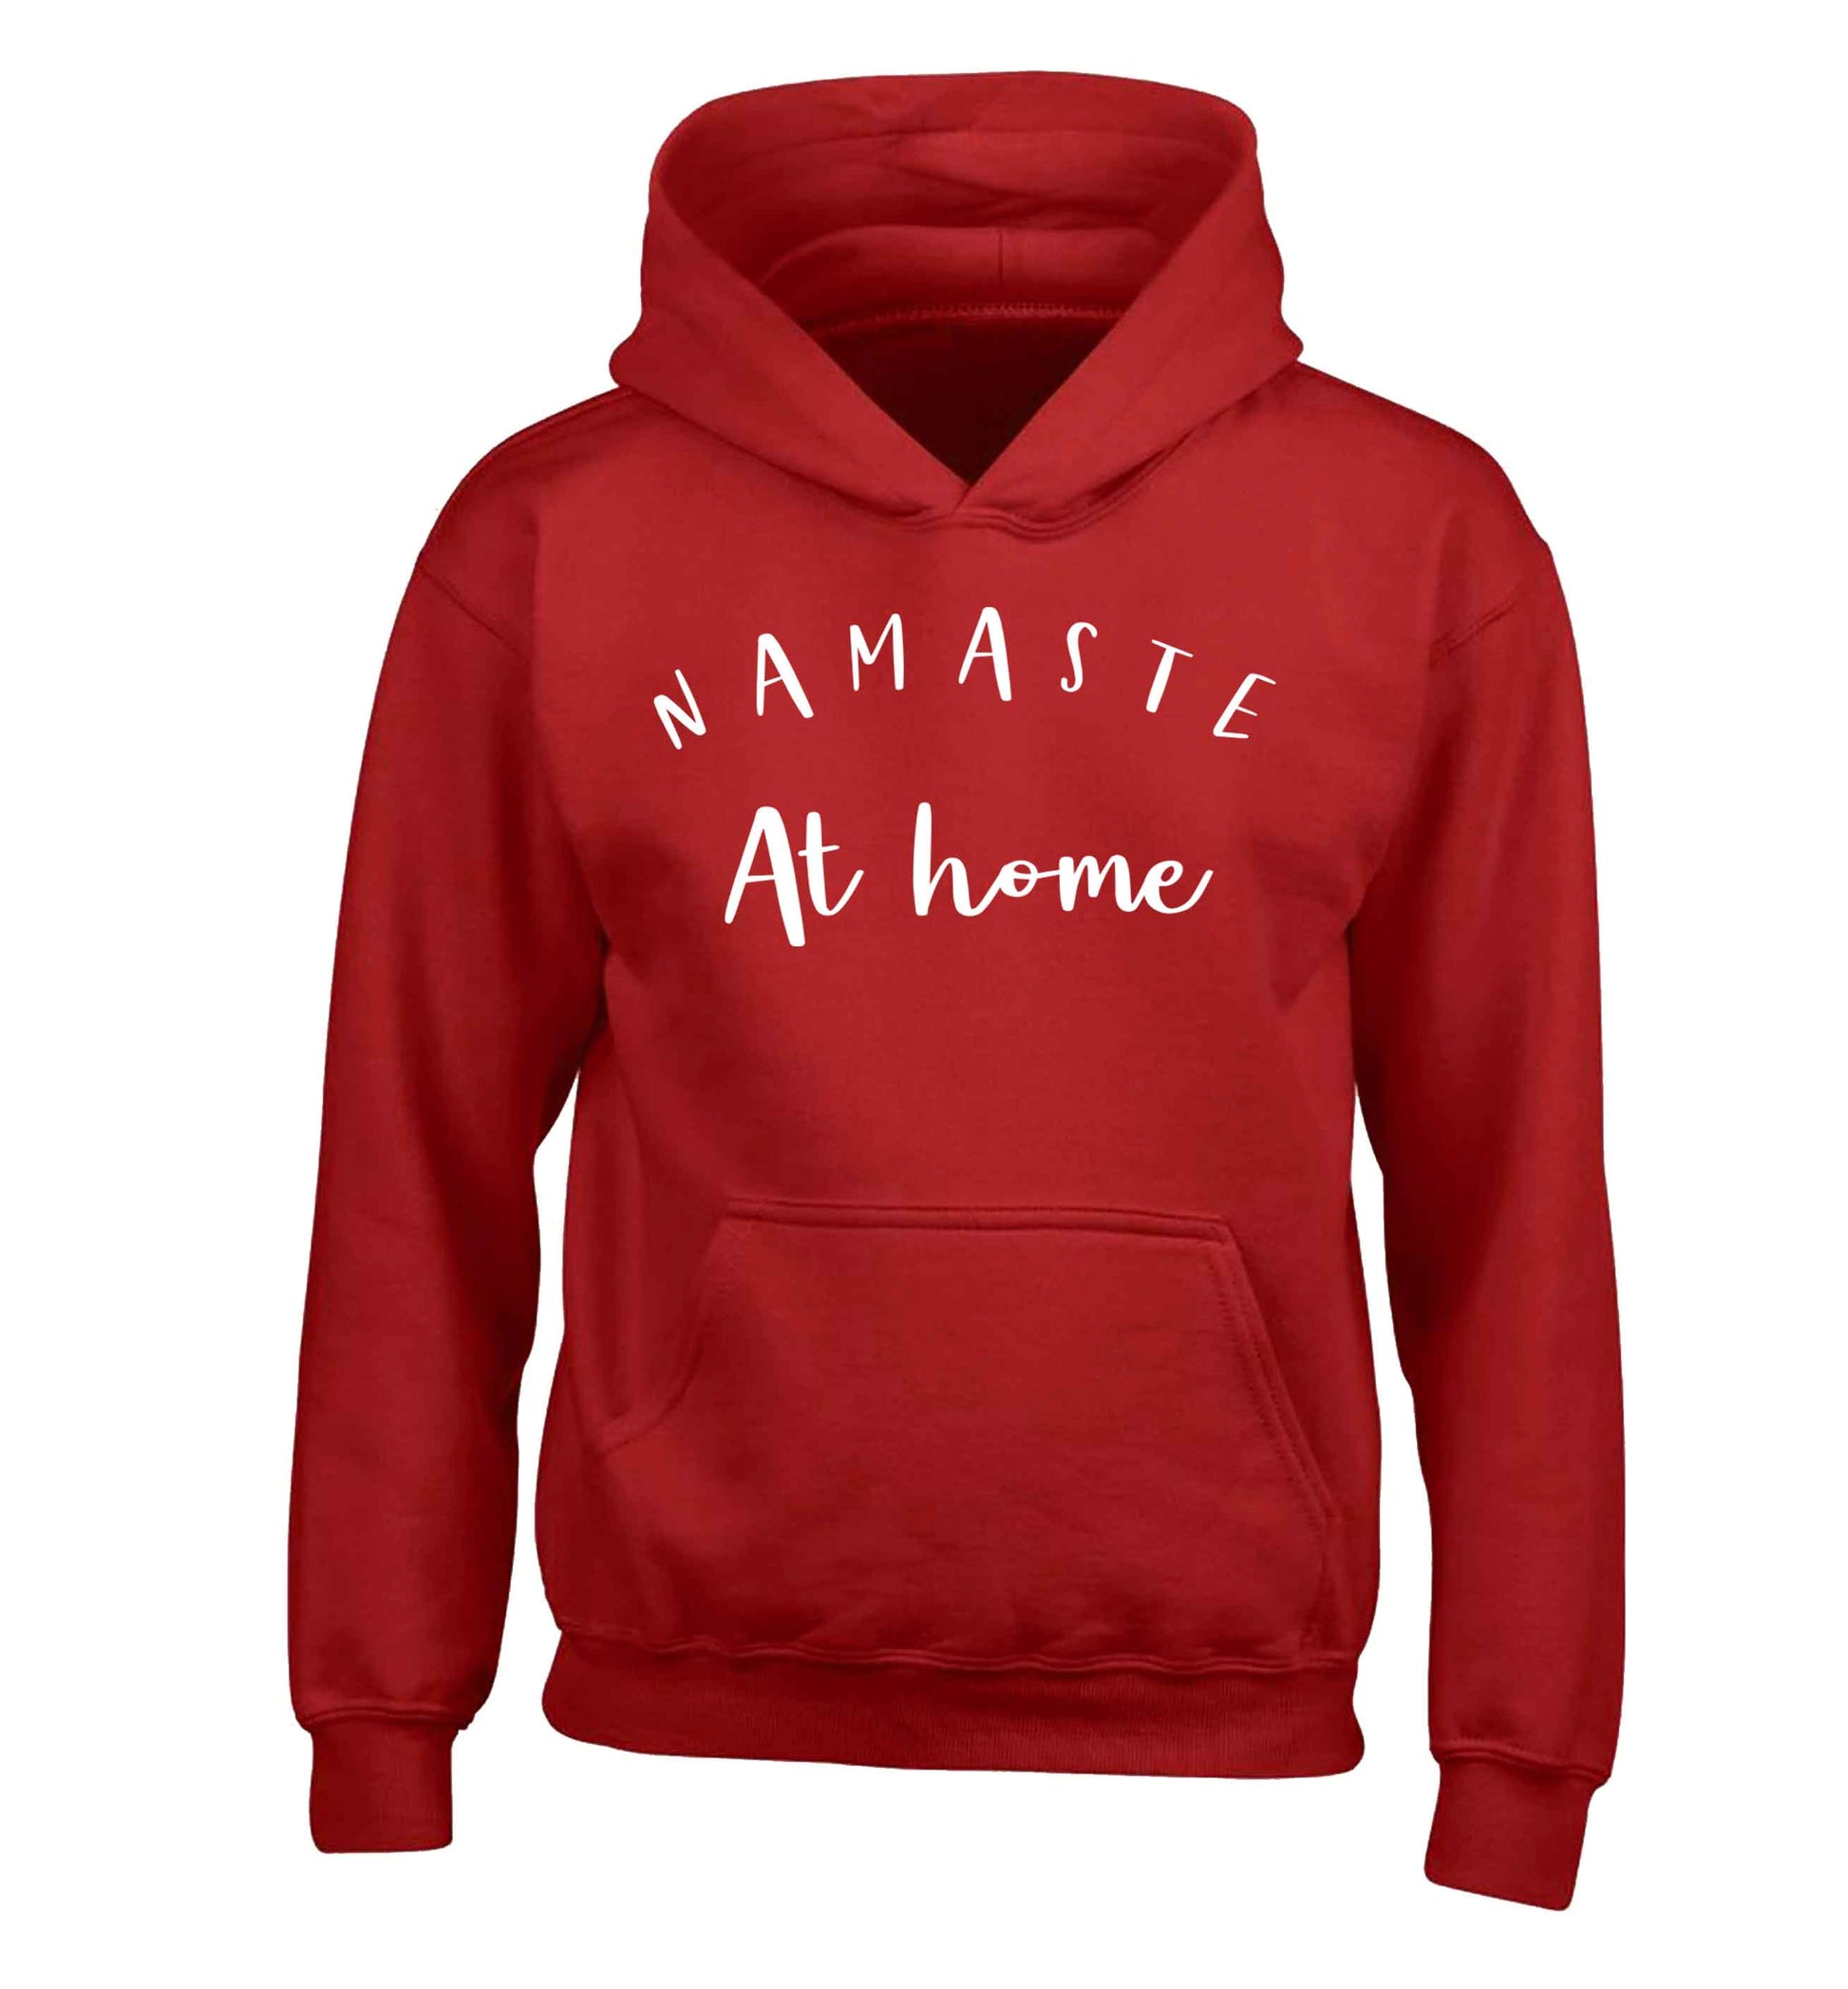 Namaste at home children's red hoodie 12-13 Years